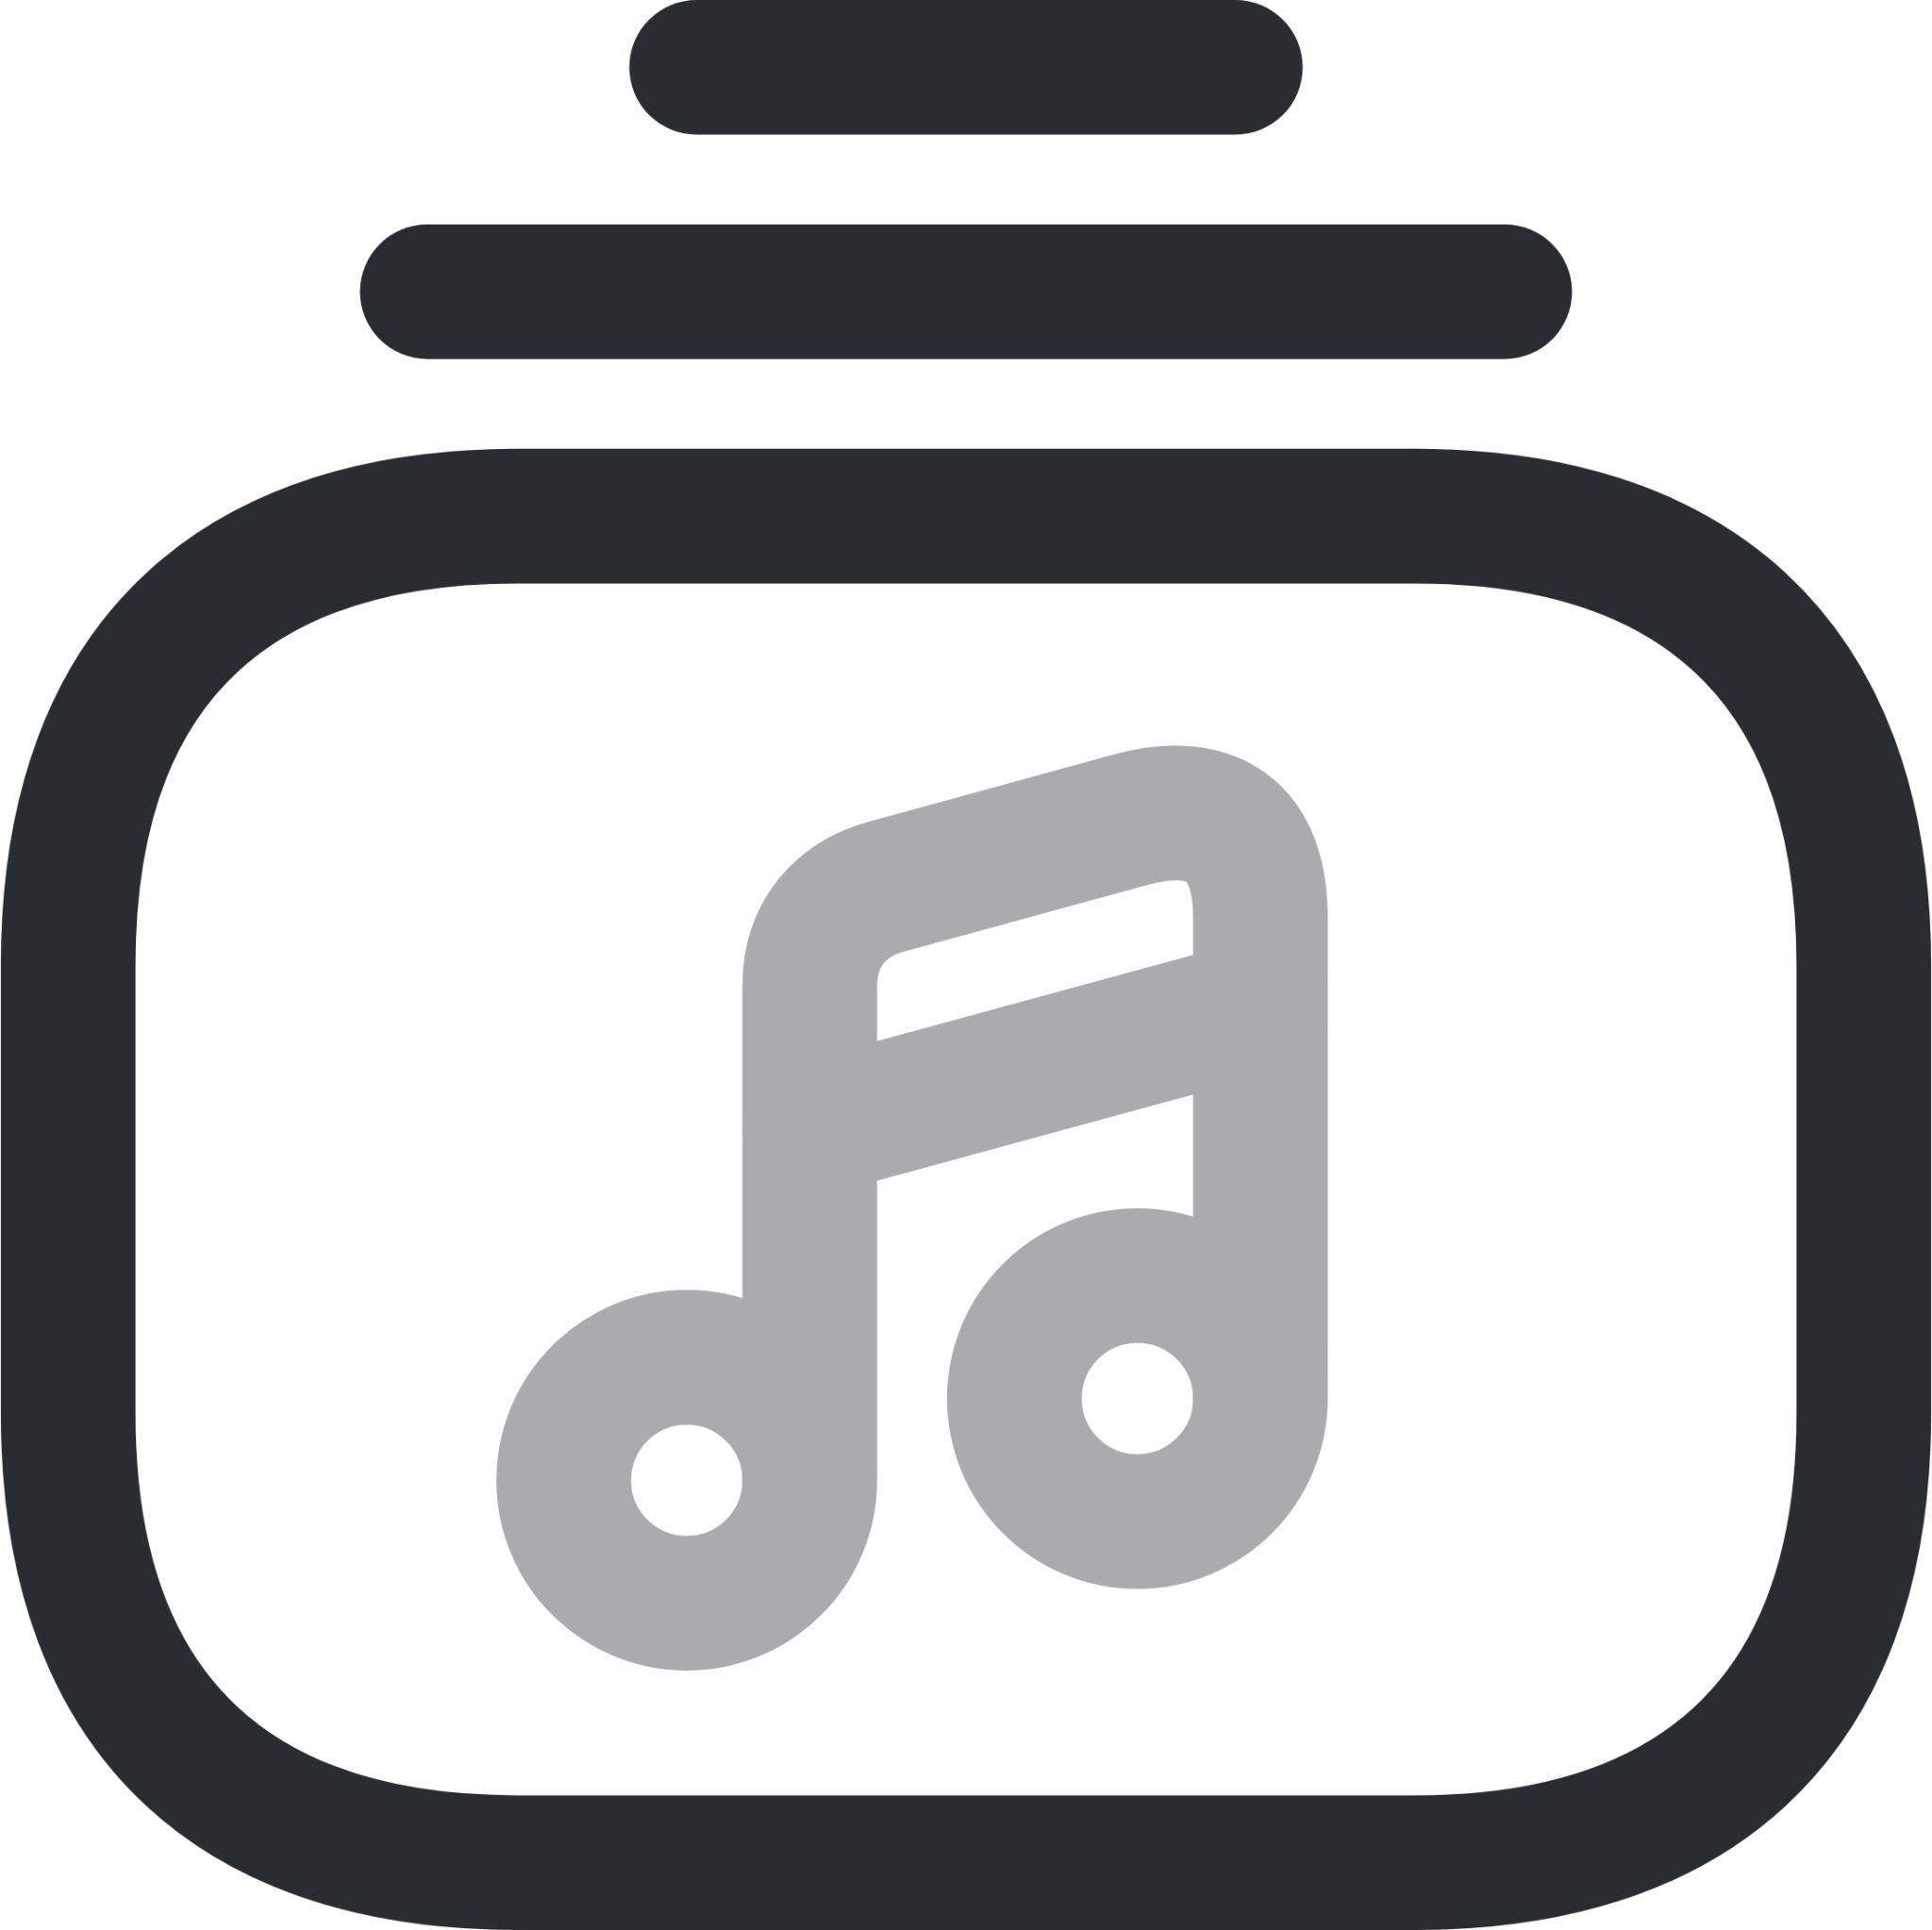 music playlist icon